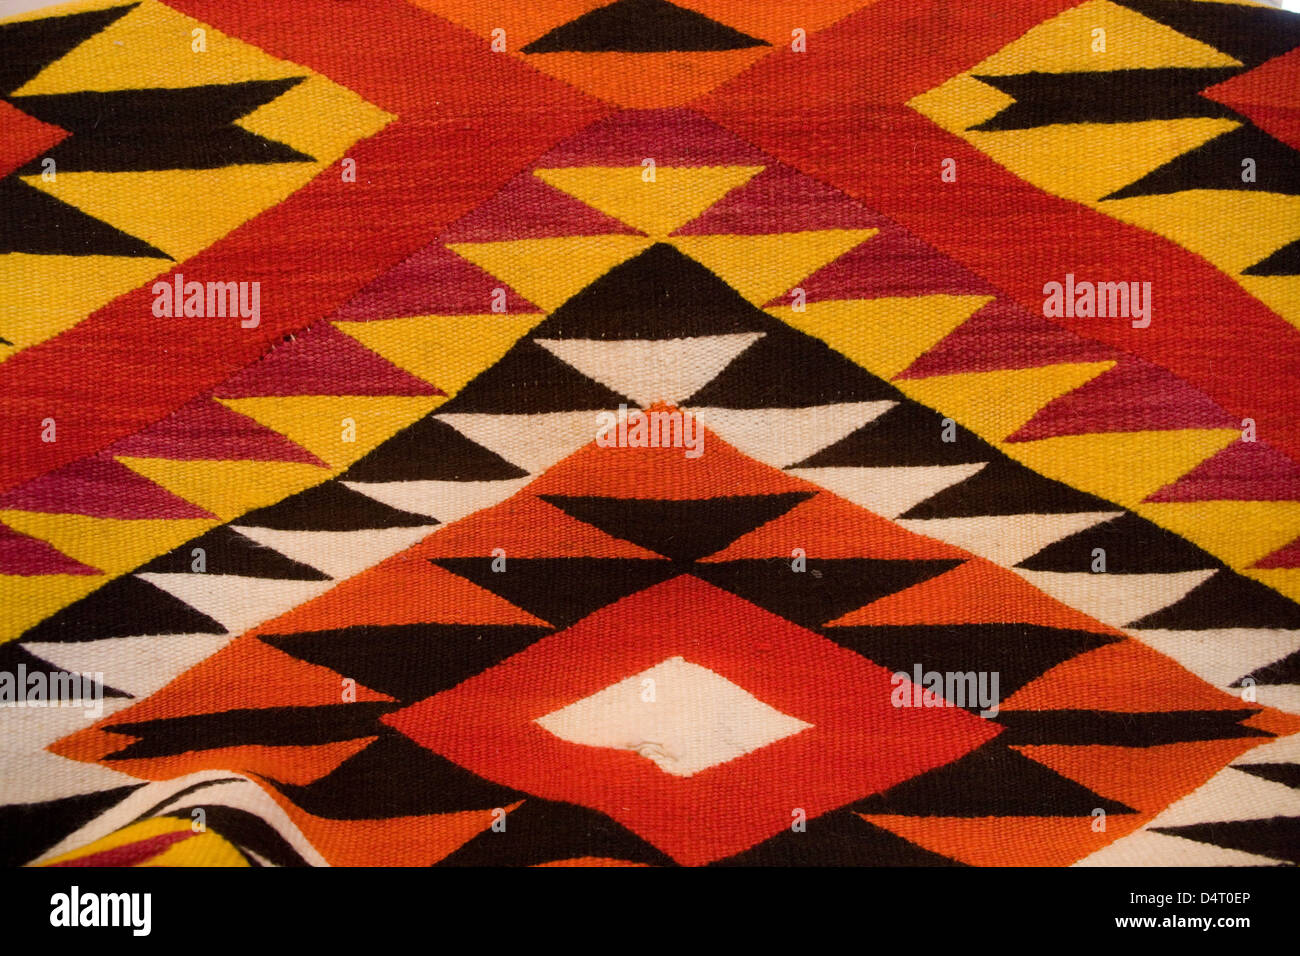 New Mexico: Native American art/blanket Stock Photo: 54616990 - Alamy